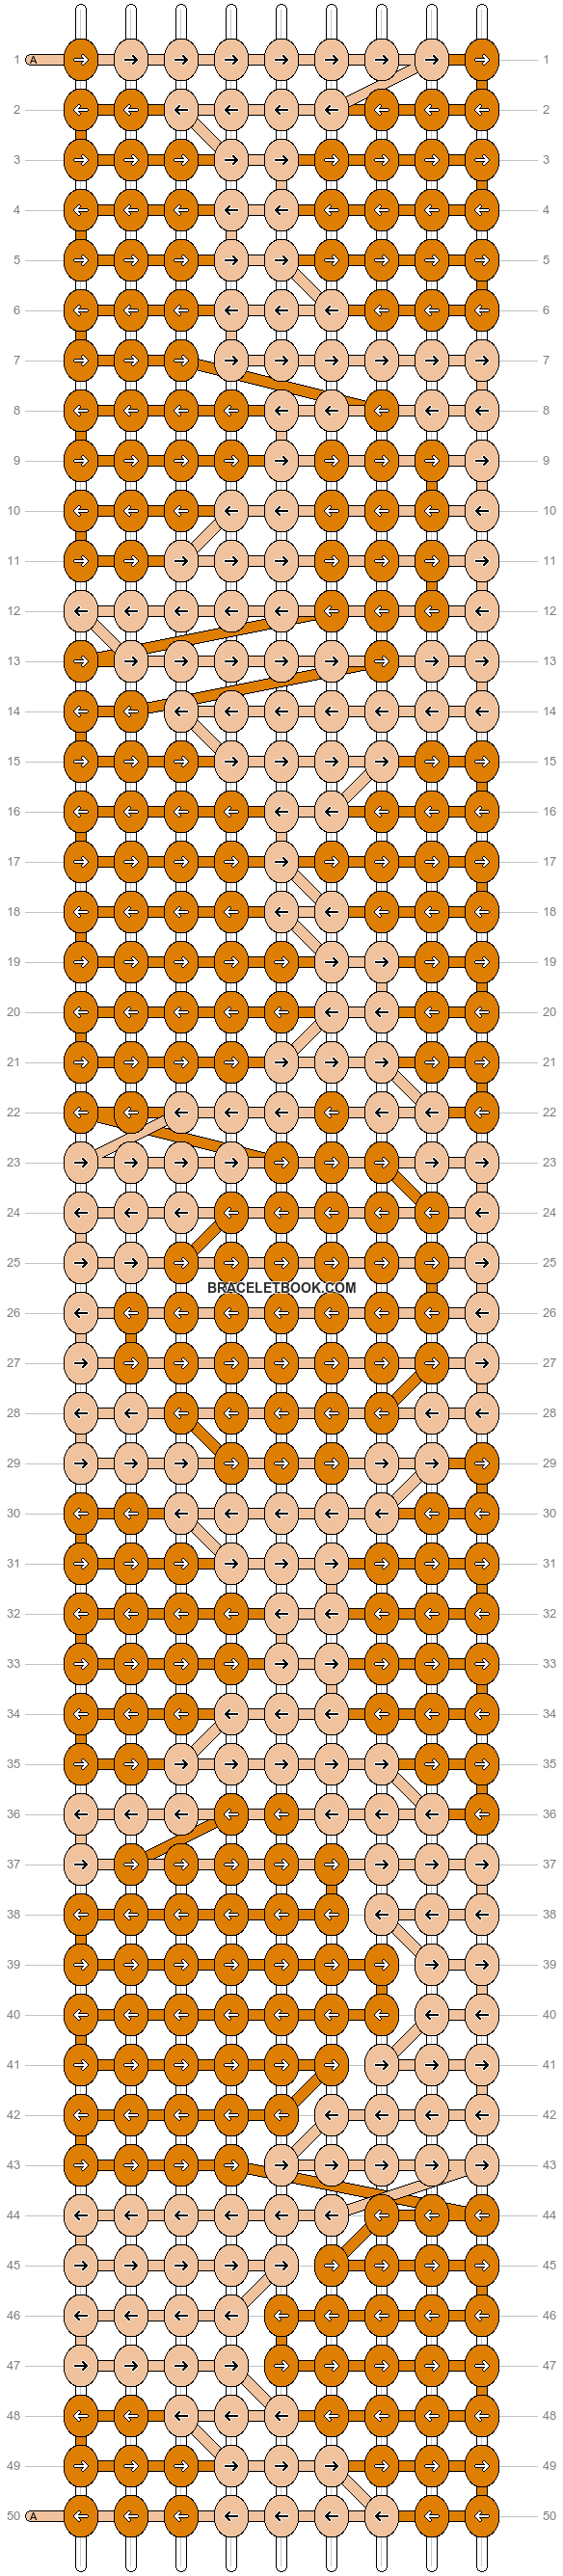 Alpha pattern #51266 variation #100664 pattern